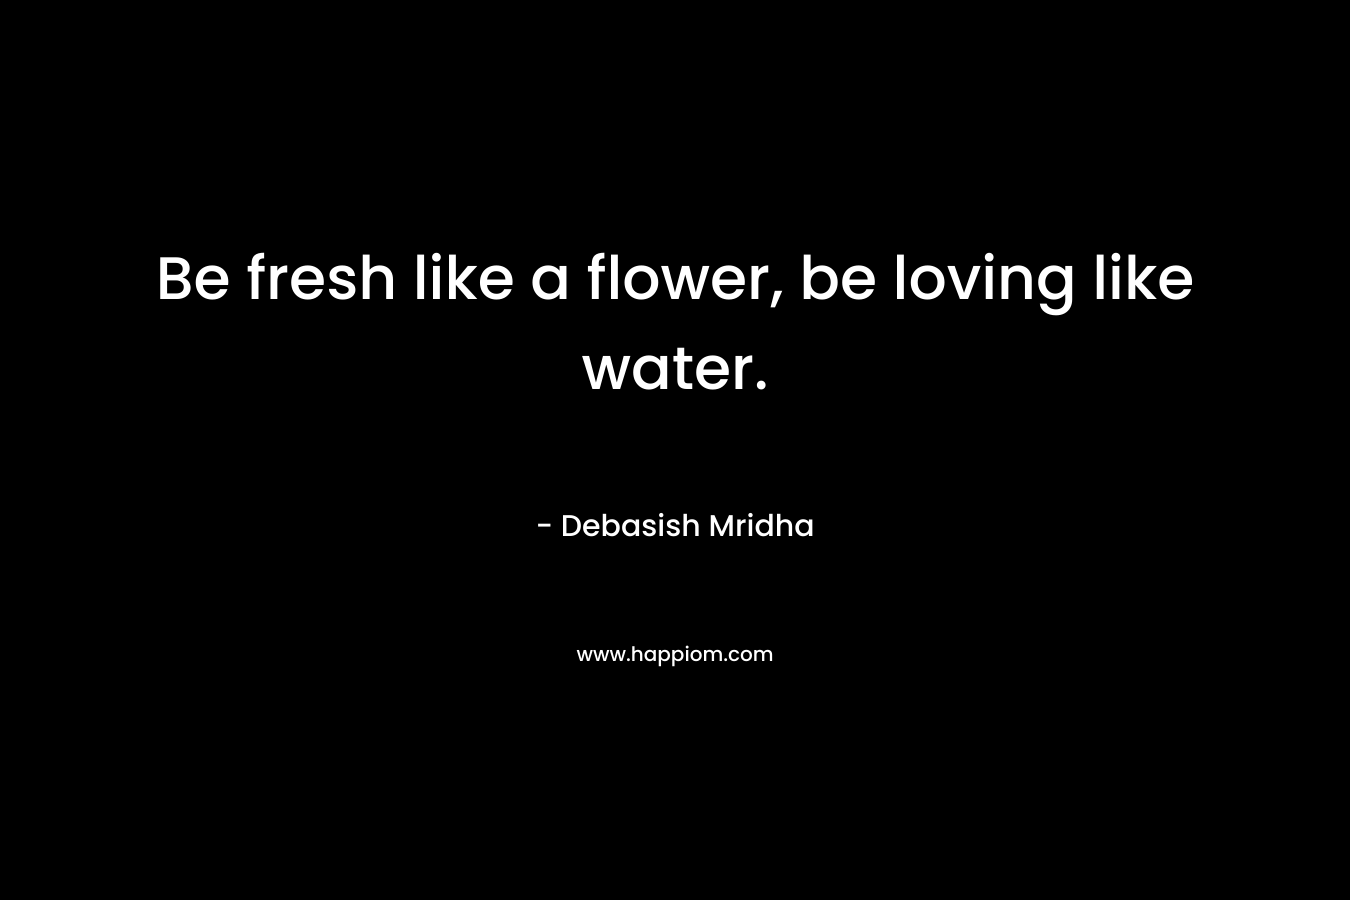 Be fresh like a flower, be loving like water.